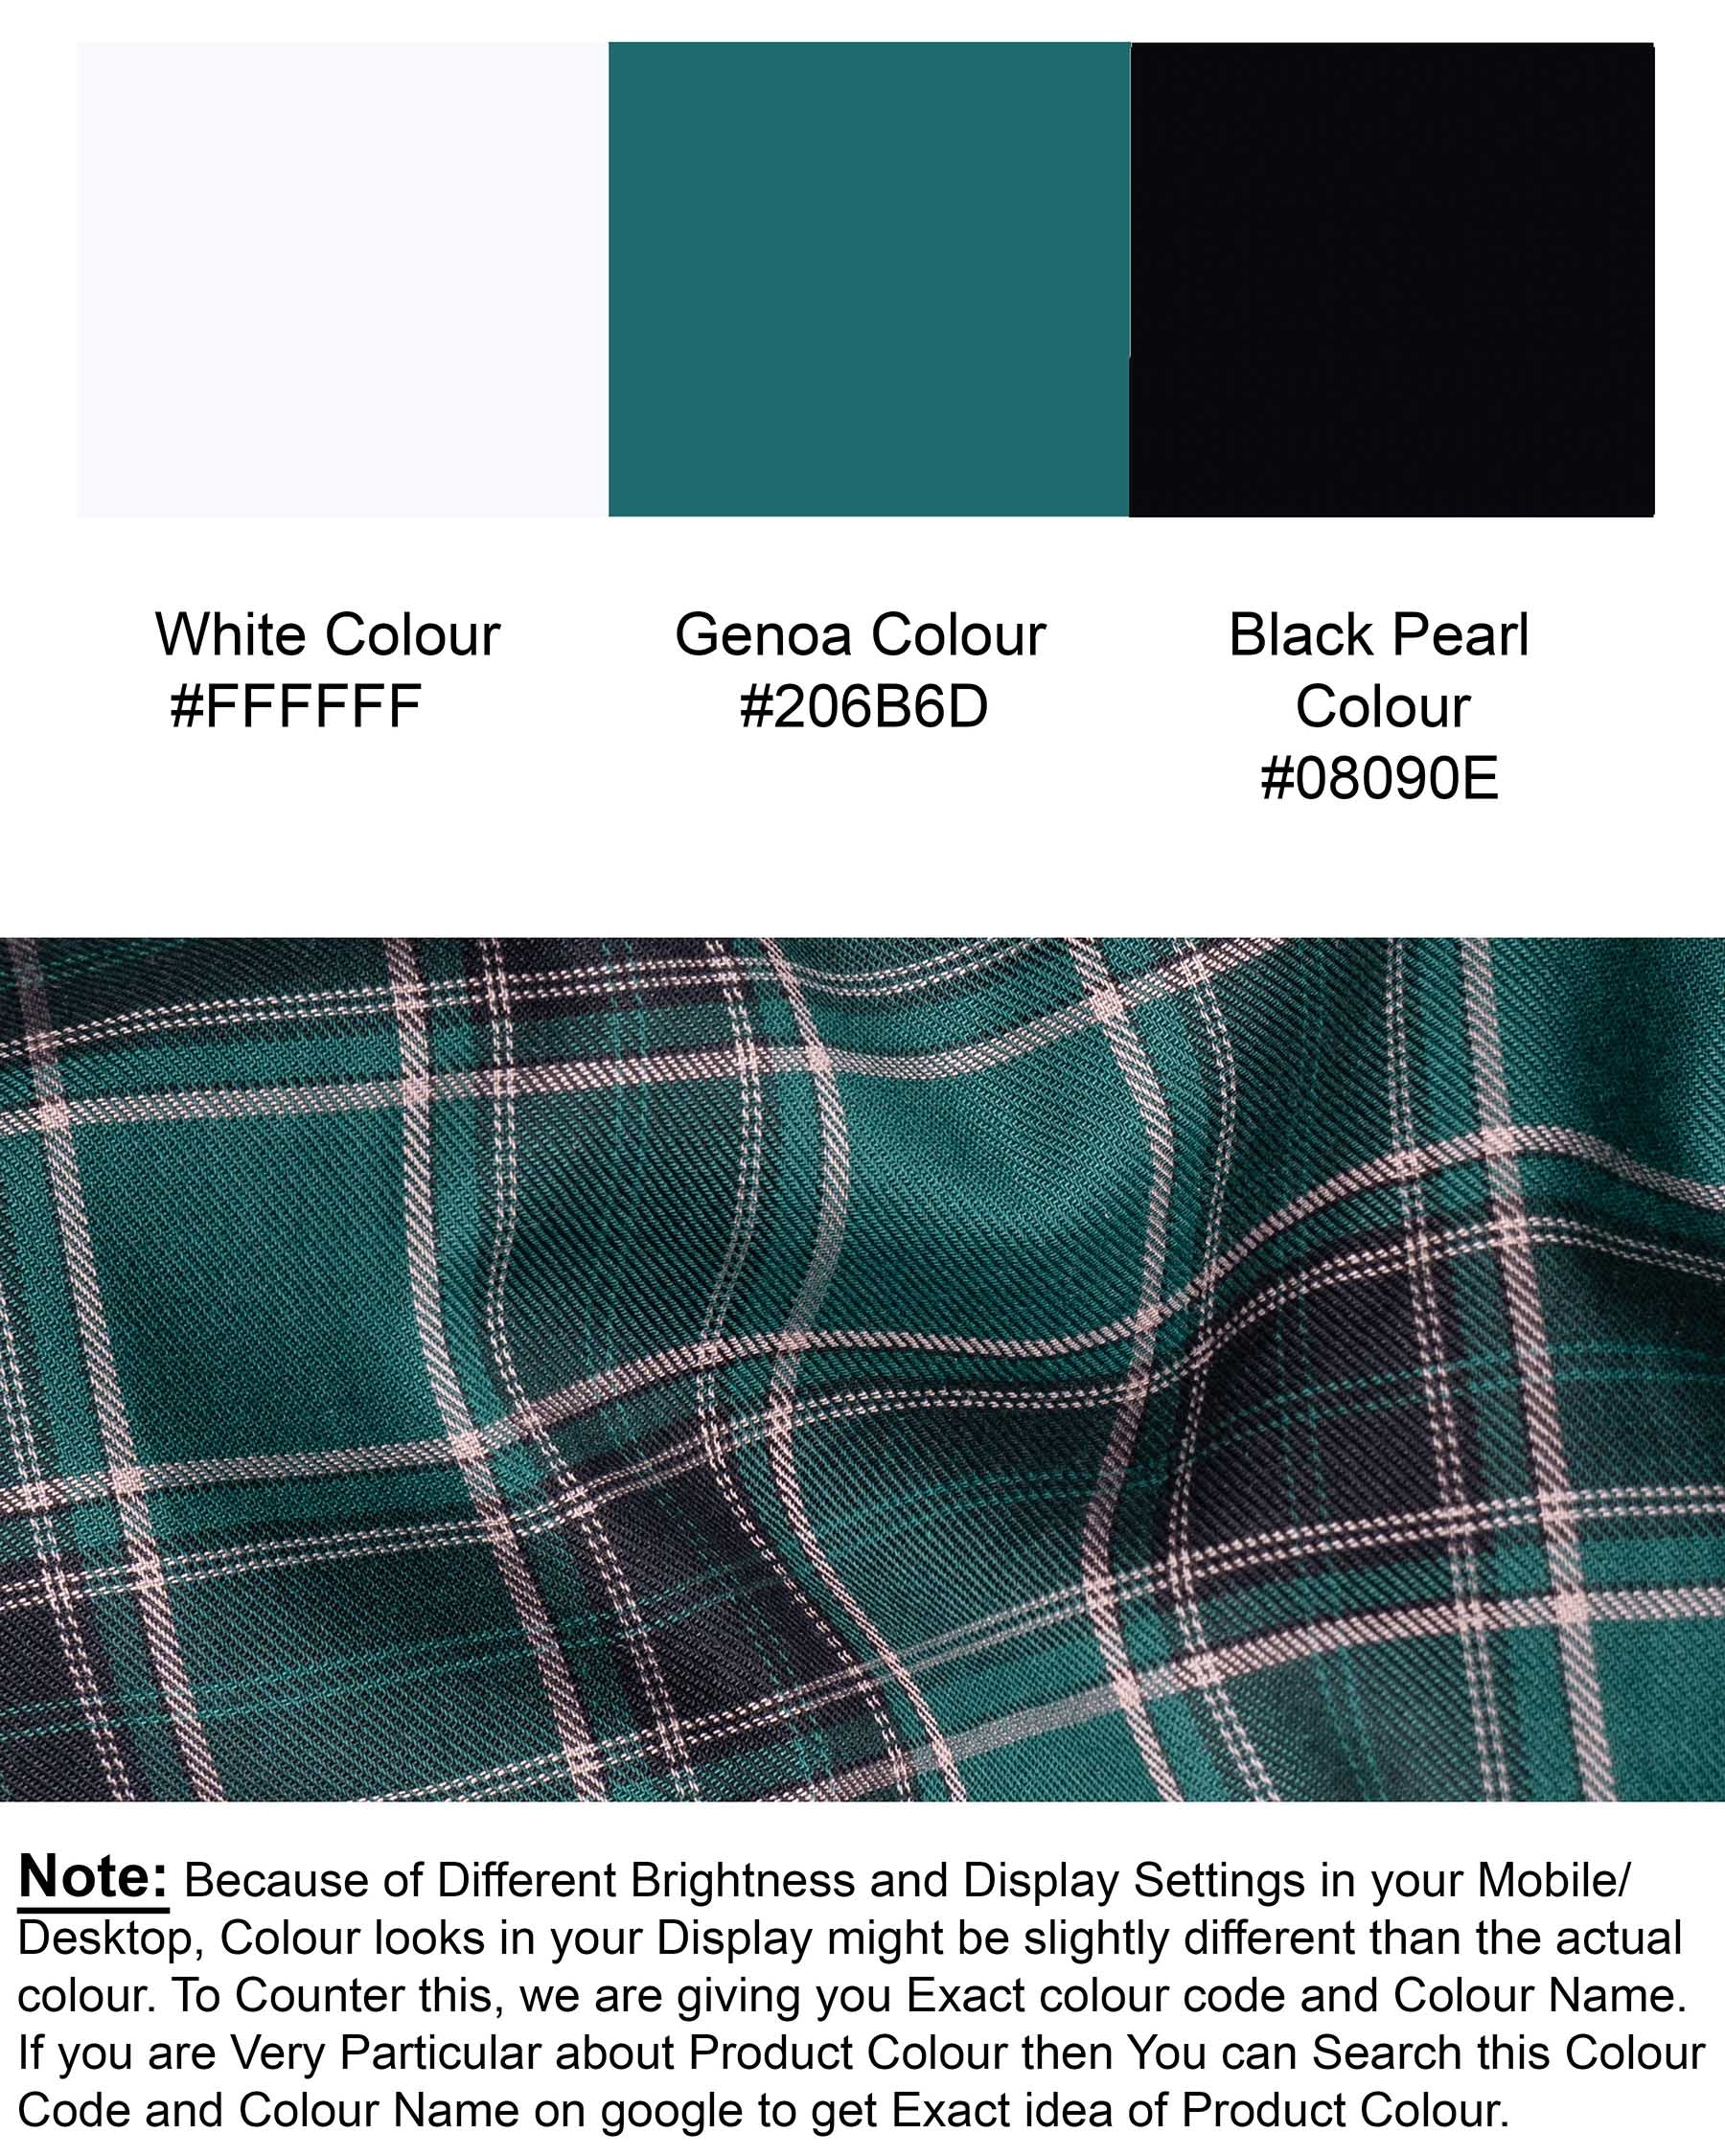 Genoa Green Twill Plaid Premium Cotton Shirt 6033-BLK-38, 6033-BLK-H-38, 6033-BLK-39, 6033-BLK-H-39, 6033-BLK-40, 6033-BLK-H-40, 6033-BLK-42, 6033-BLK-H-42, 6033-BLK-44, 6033-BLK-H-44, 6033-BLK-46, 6033-BLK-H-46, 6033-BLK-48, 6033-BLK-H-48, 6033-BLK-50, 6033-BLK-H-50, 6033-BLK-52, 6033-BLK-H-52